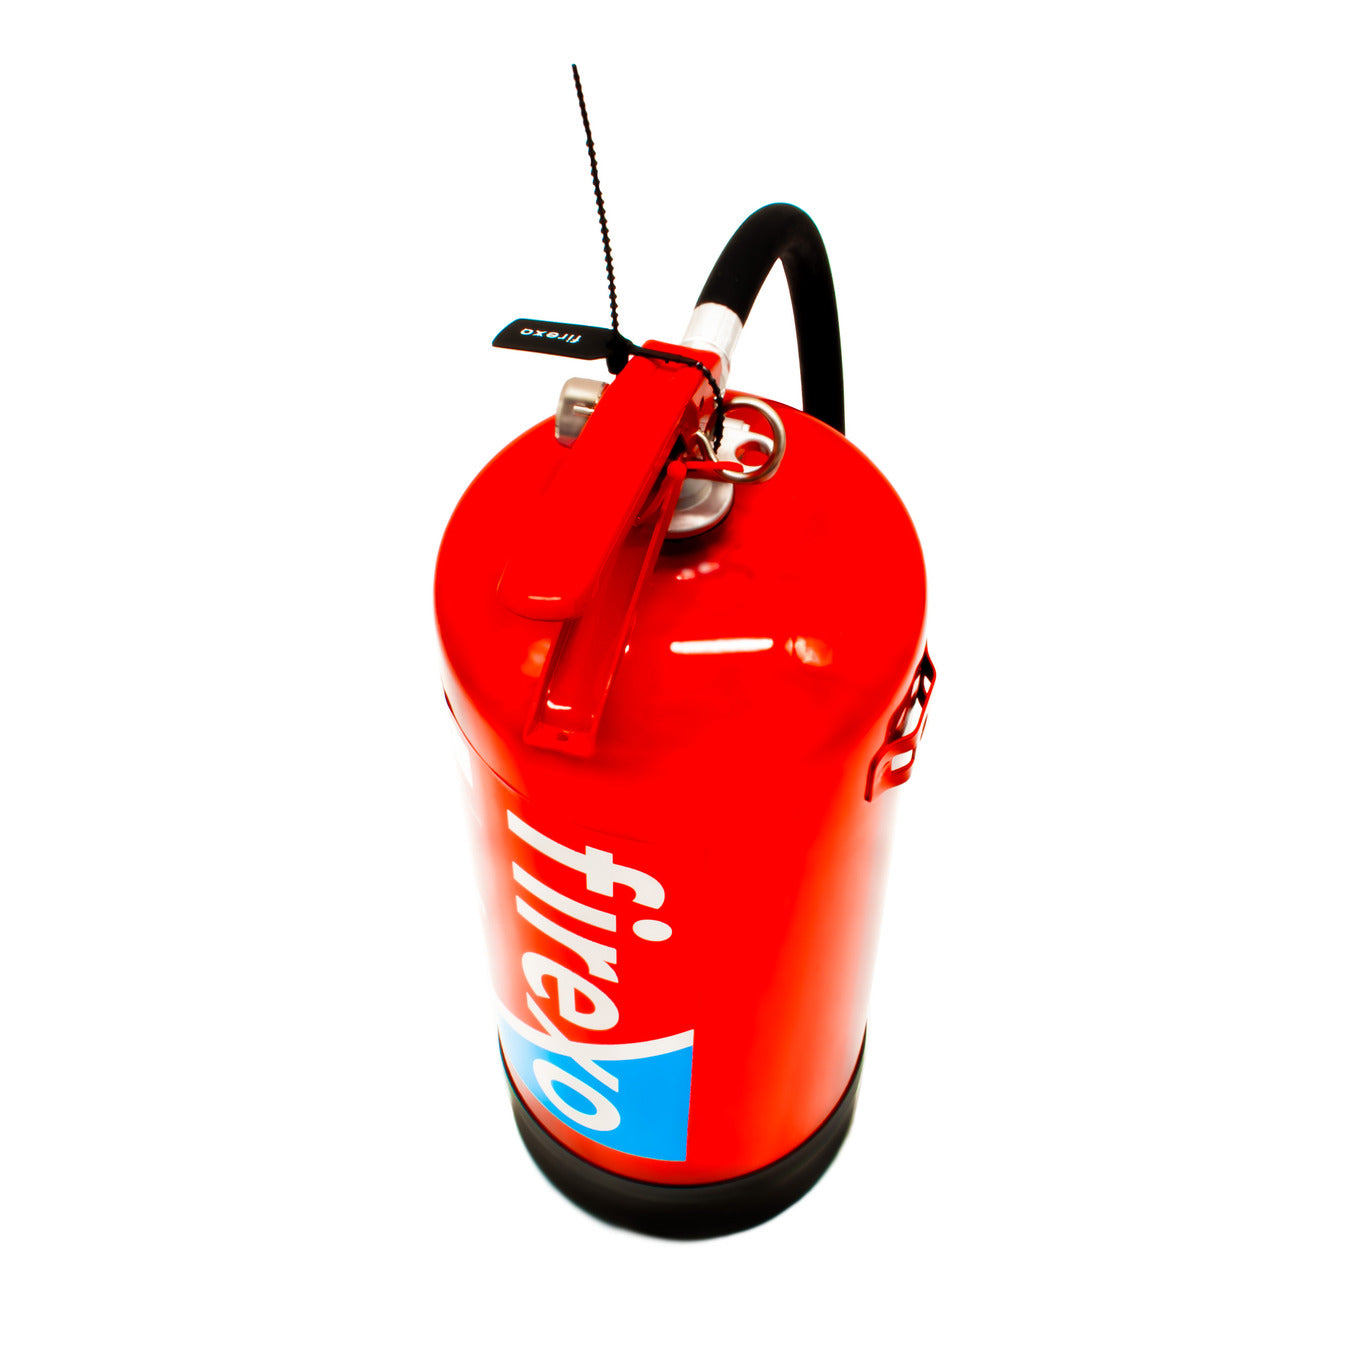 Firexo 6 Litre Fires Extinguisher